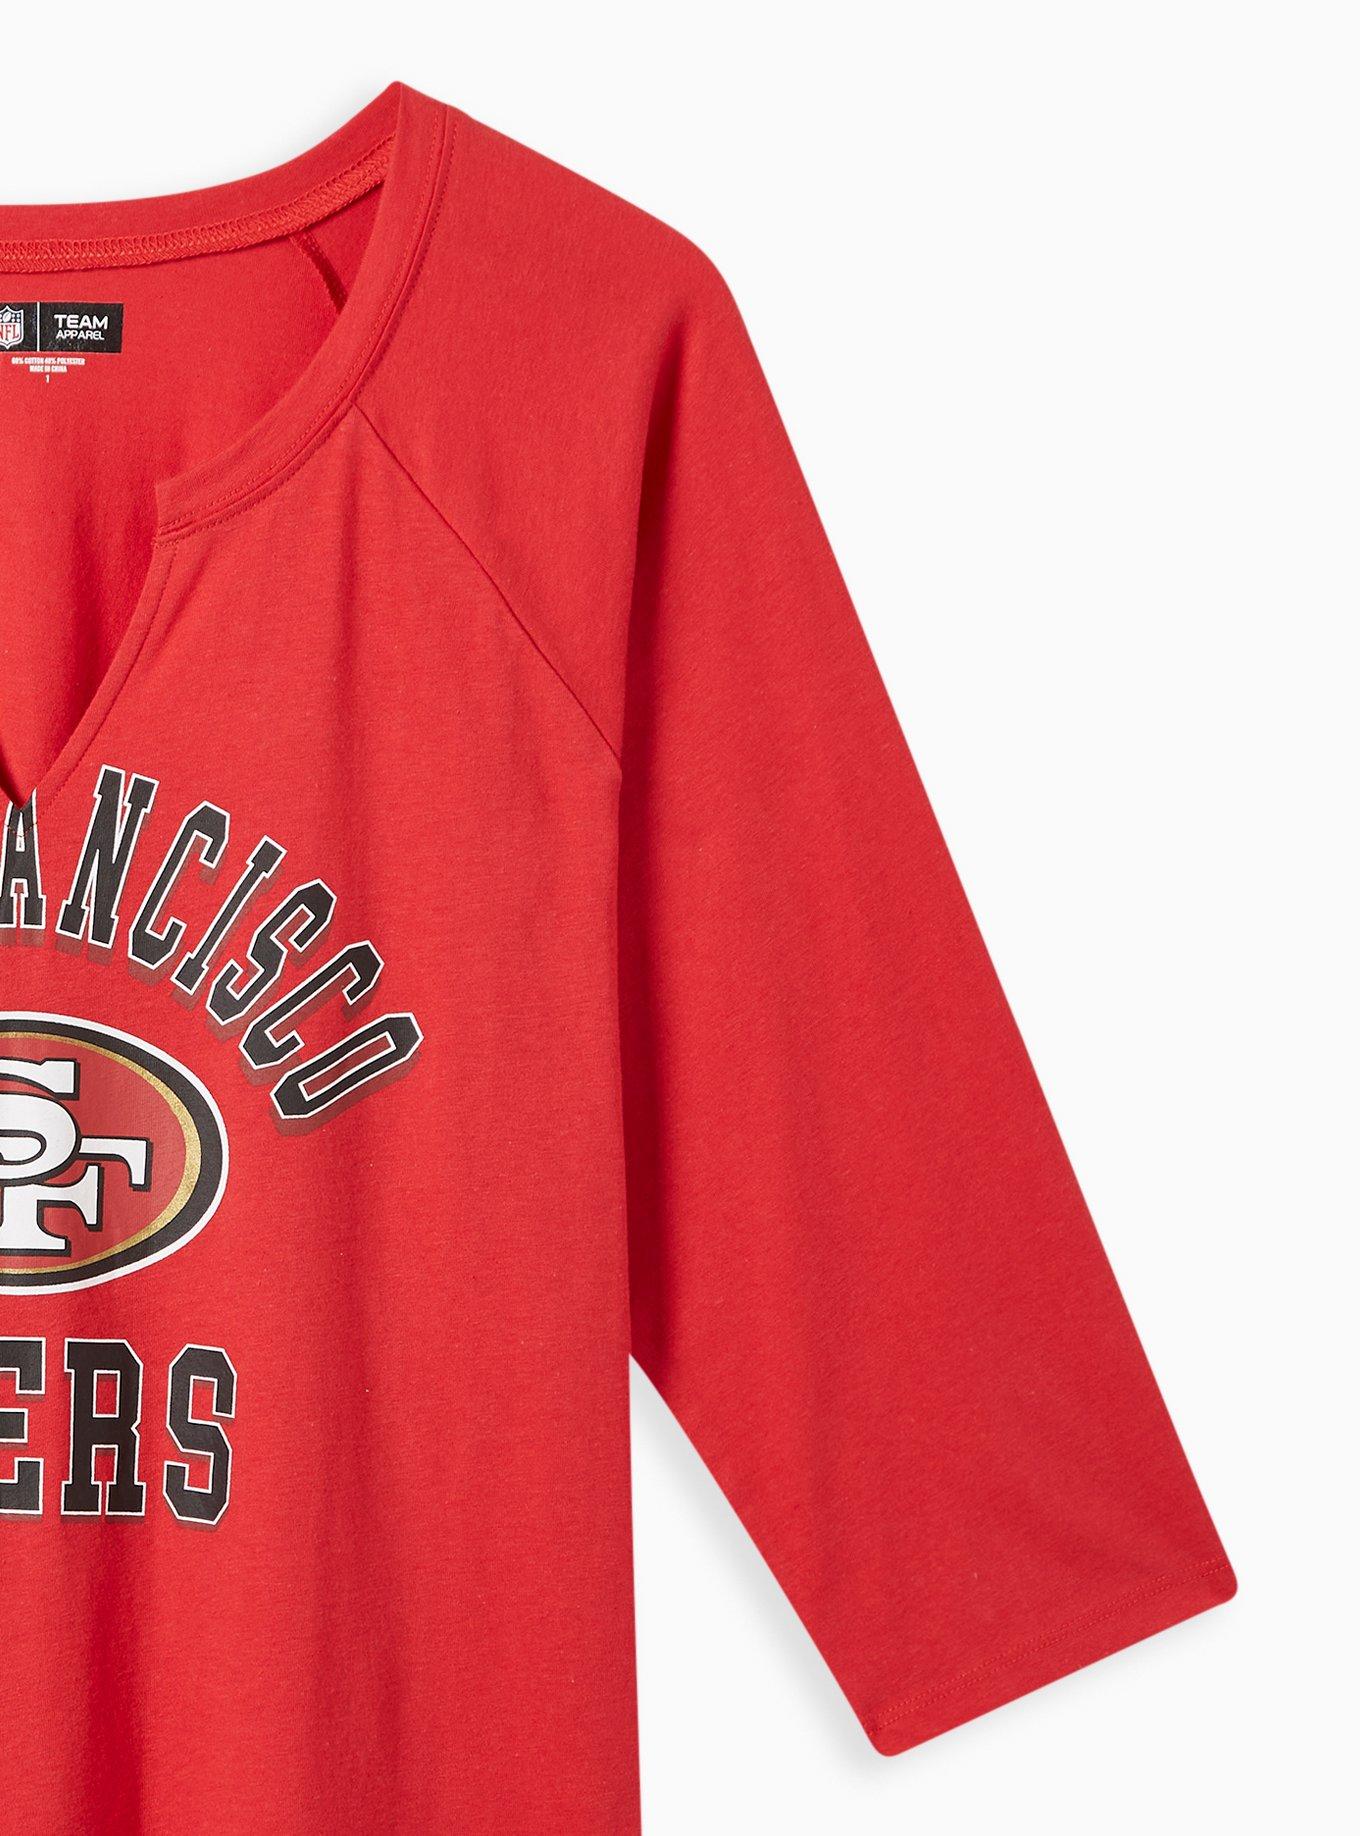 San Francisco 49ers Women's NFL Team Apparel Plus Size Shirt 1X